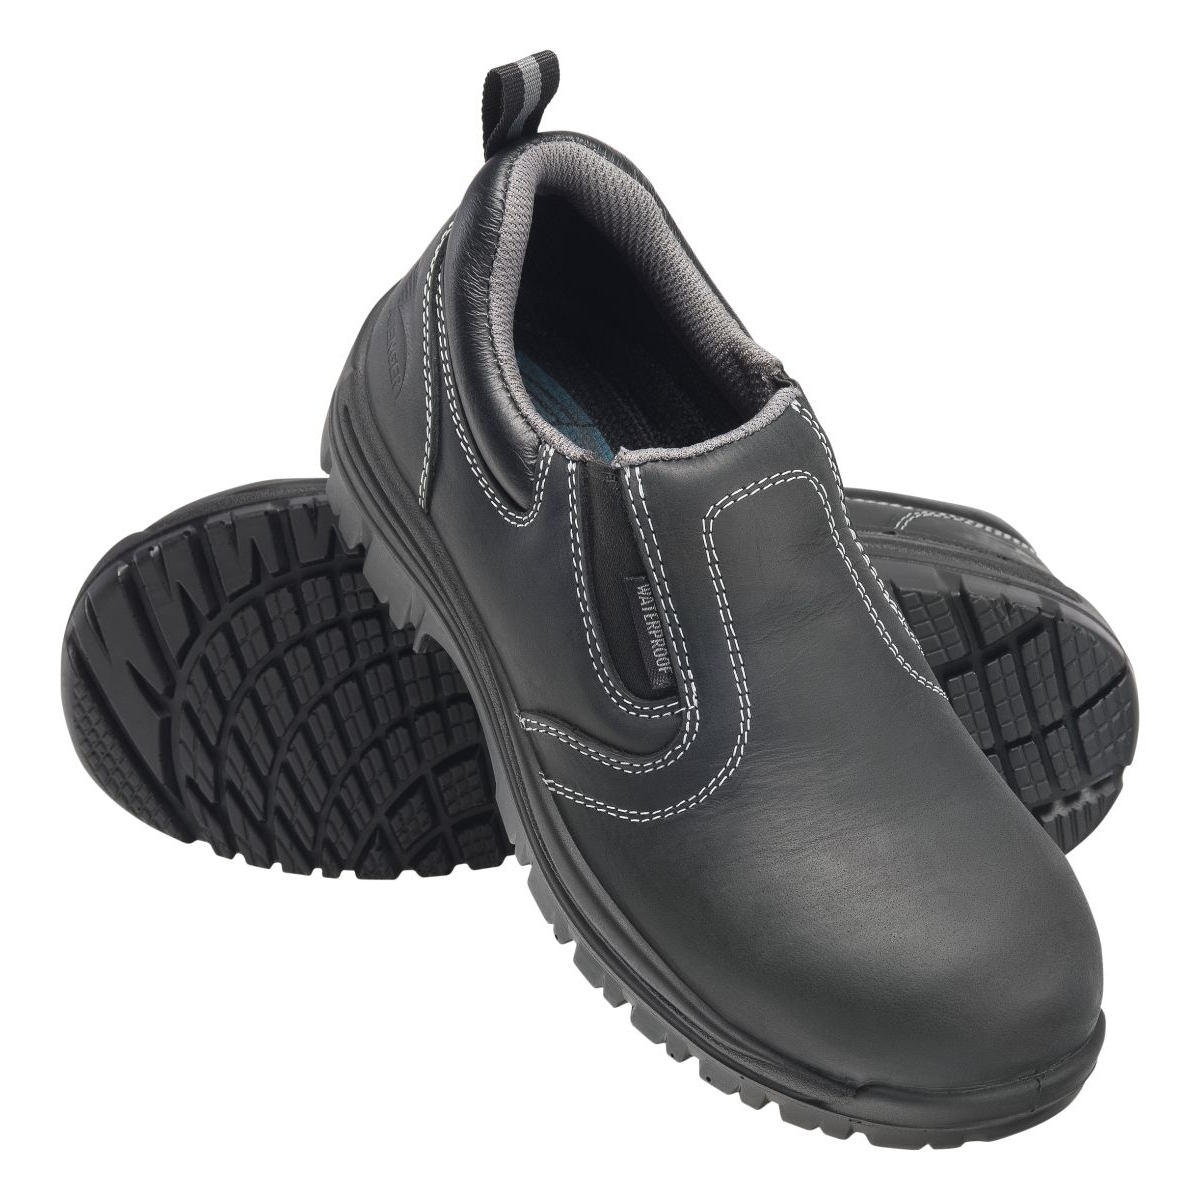 FSI FOOTWEAR SPECIALTIES INTERNATIONAL NAUTILUS Avenger Women's Foreman Slip-On Composite Toe PR Work Shoes Black - A7169 - BLACK, 6-M